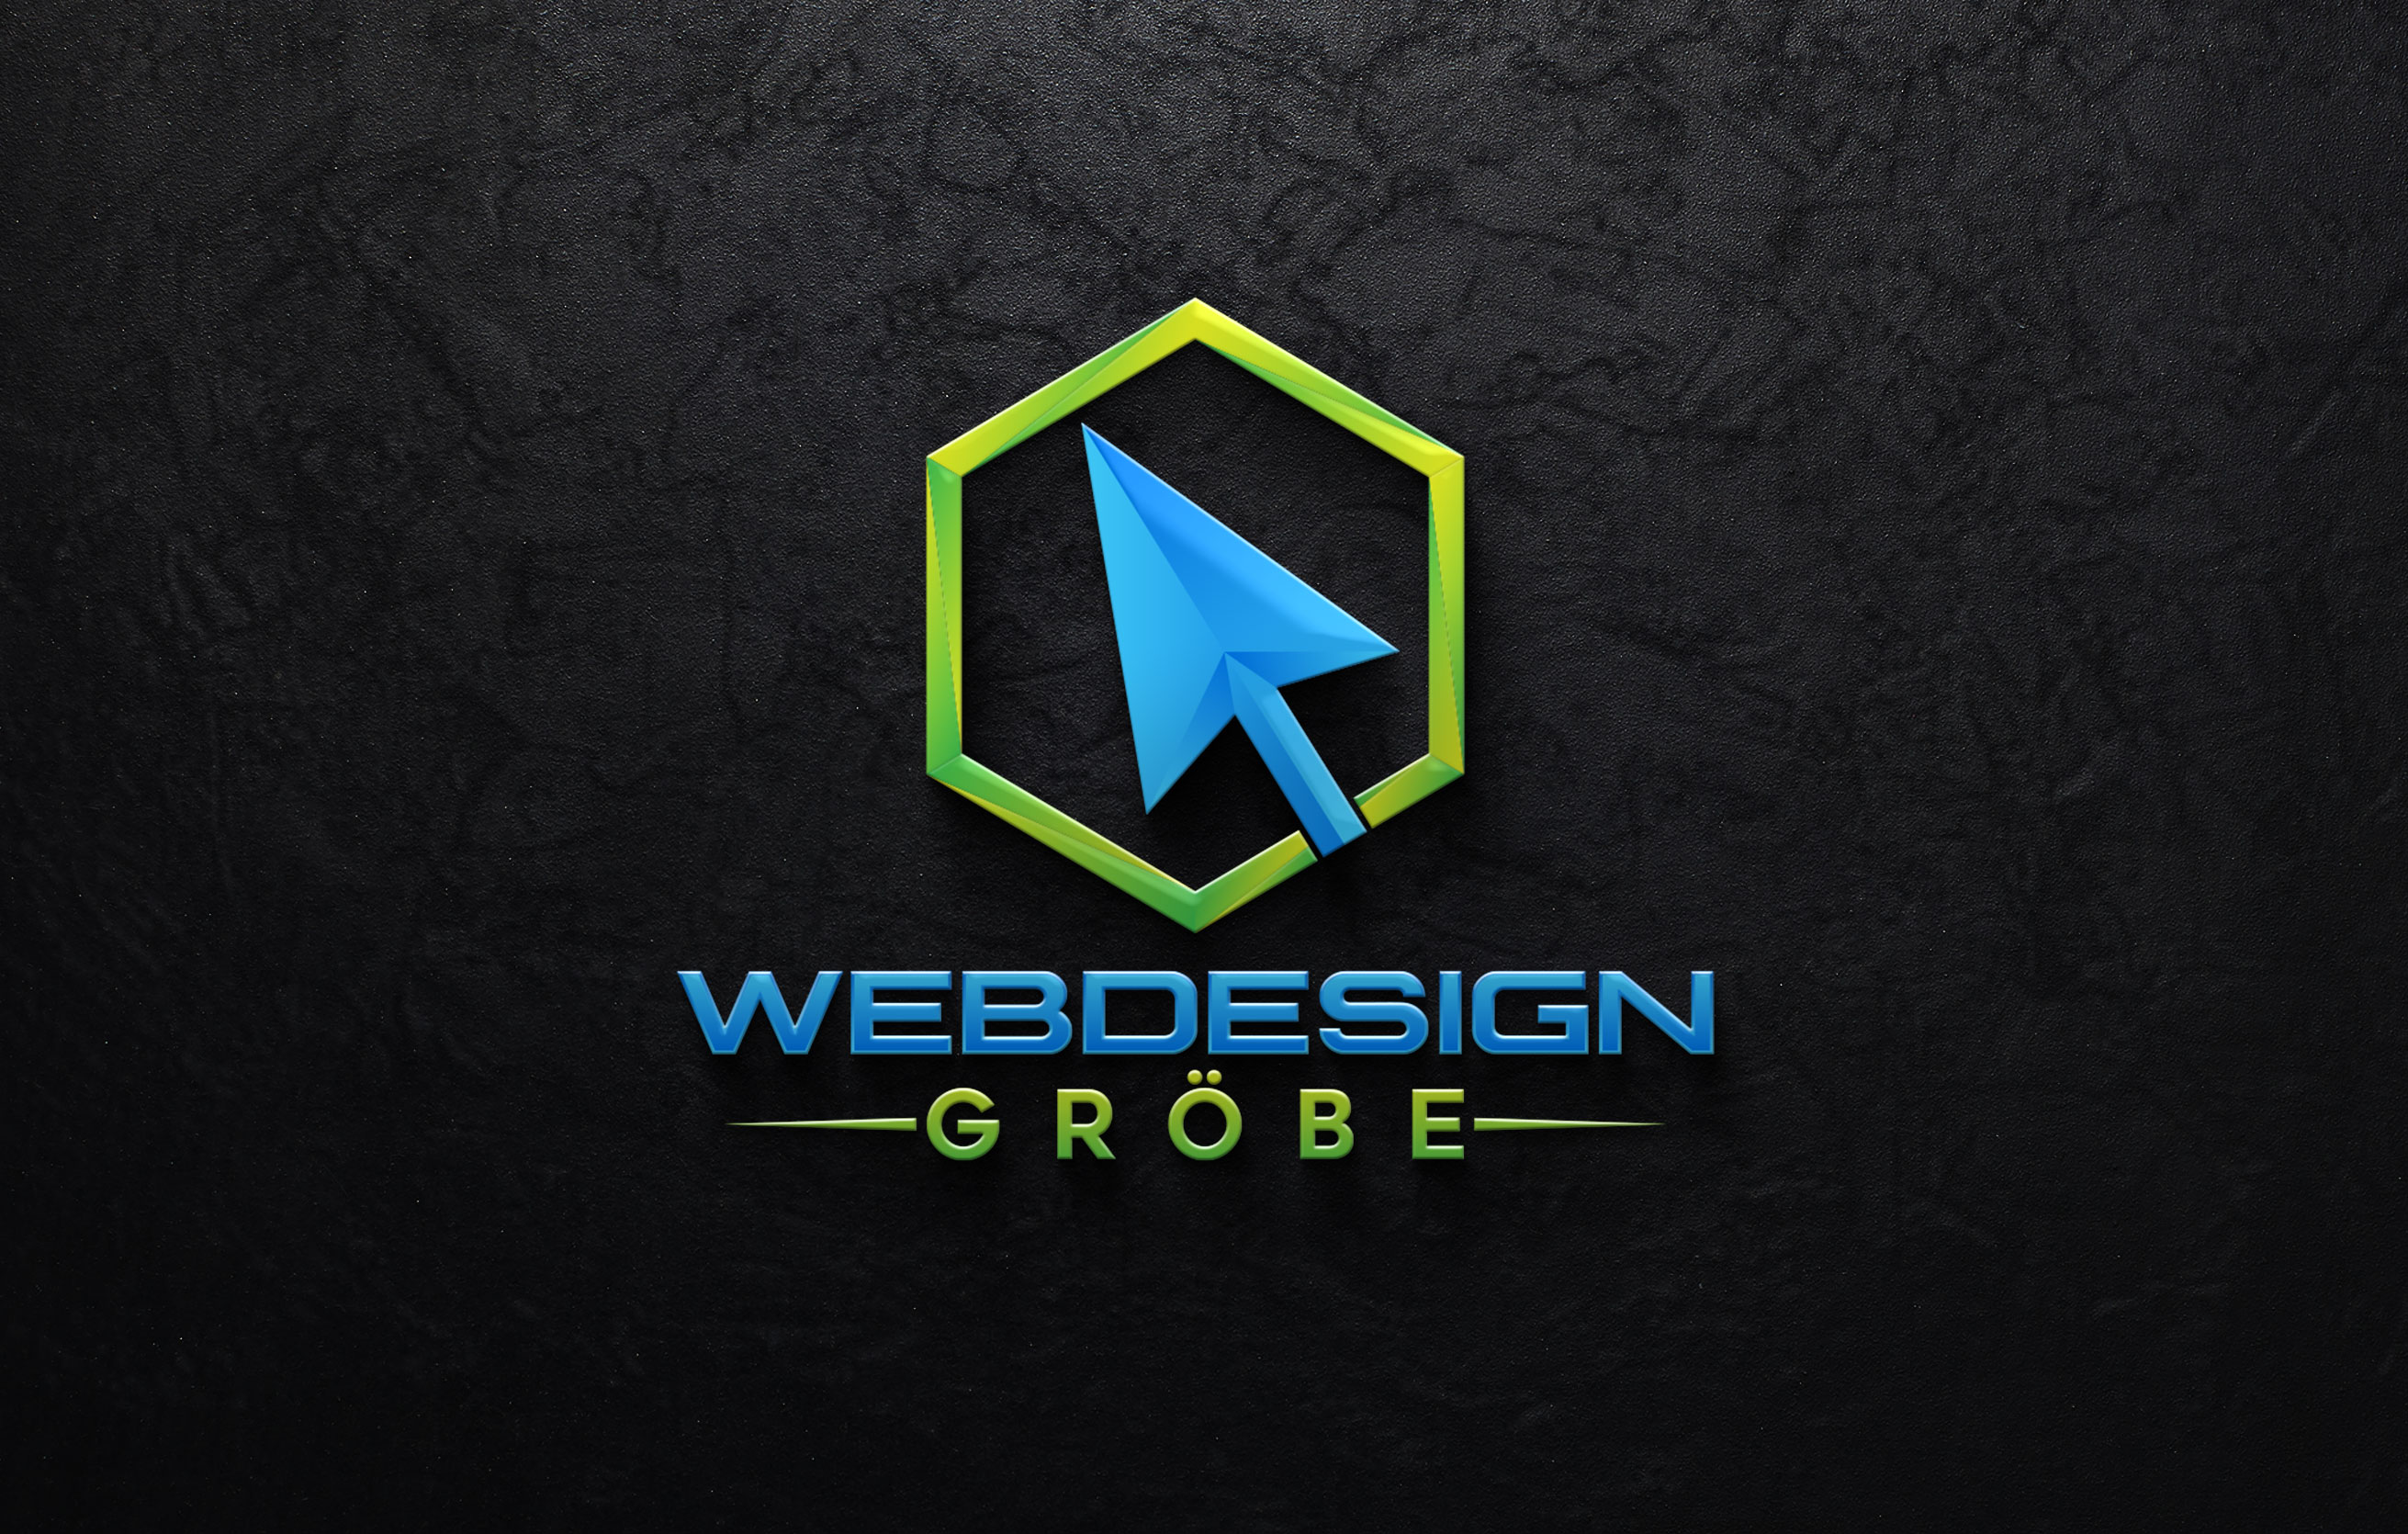 (c) Webdesign-groebe.de